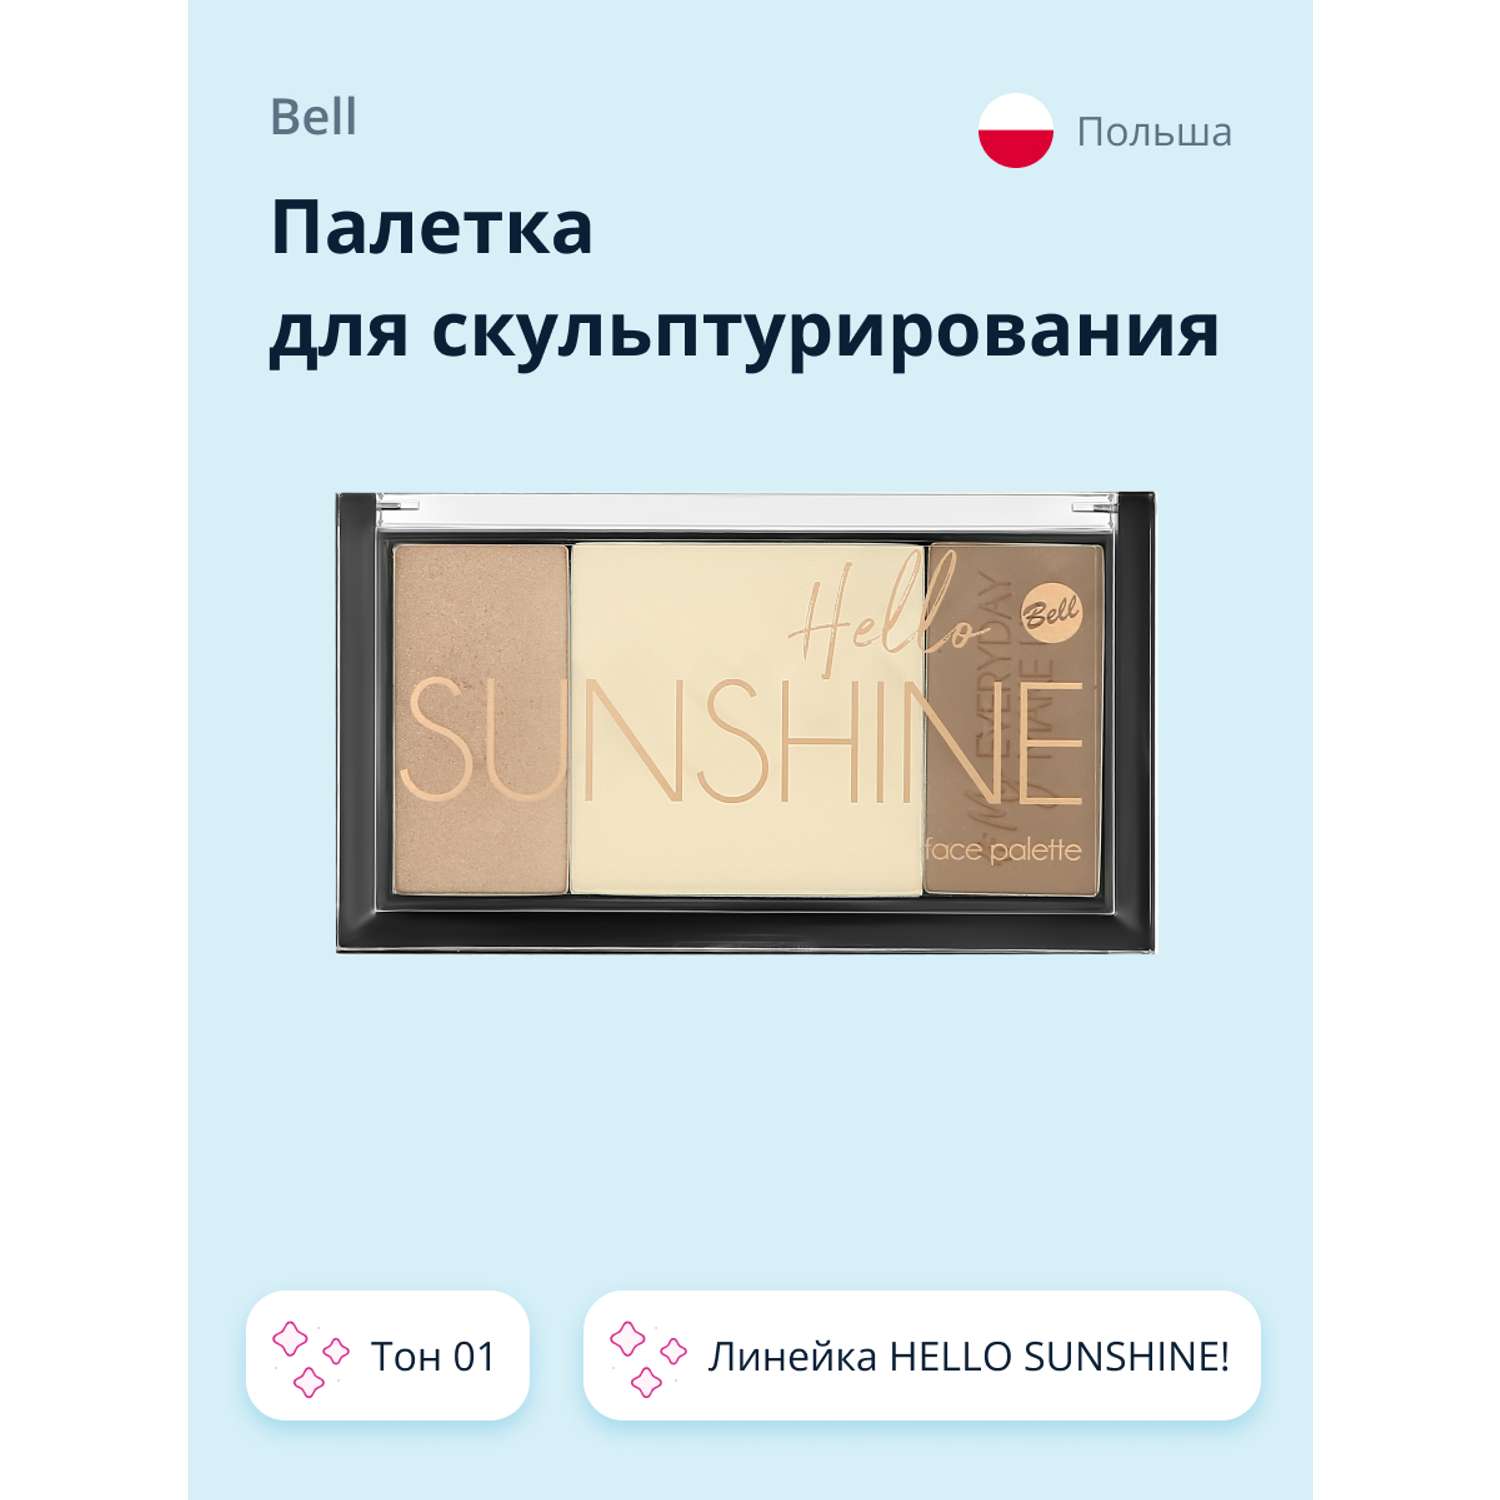 Палетка для контуринга Bell Hello sunshine! face palette тон 01 - фото 1